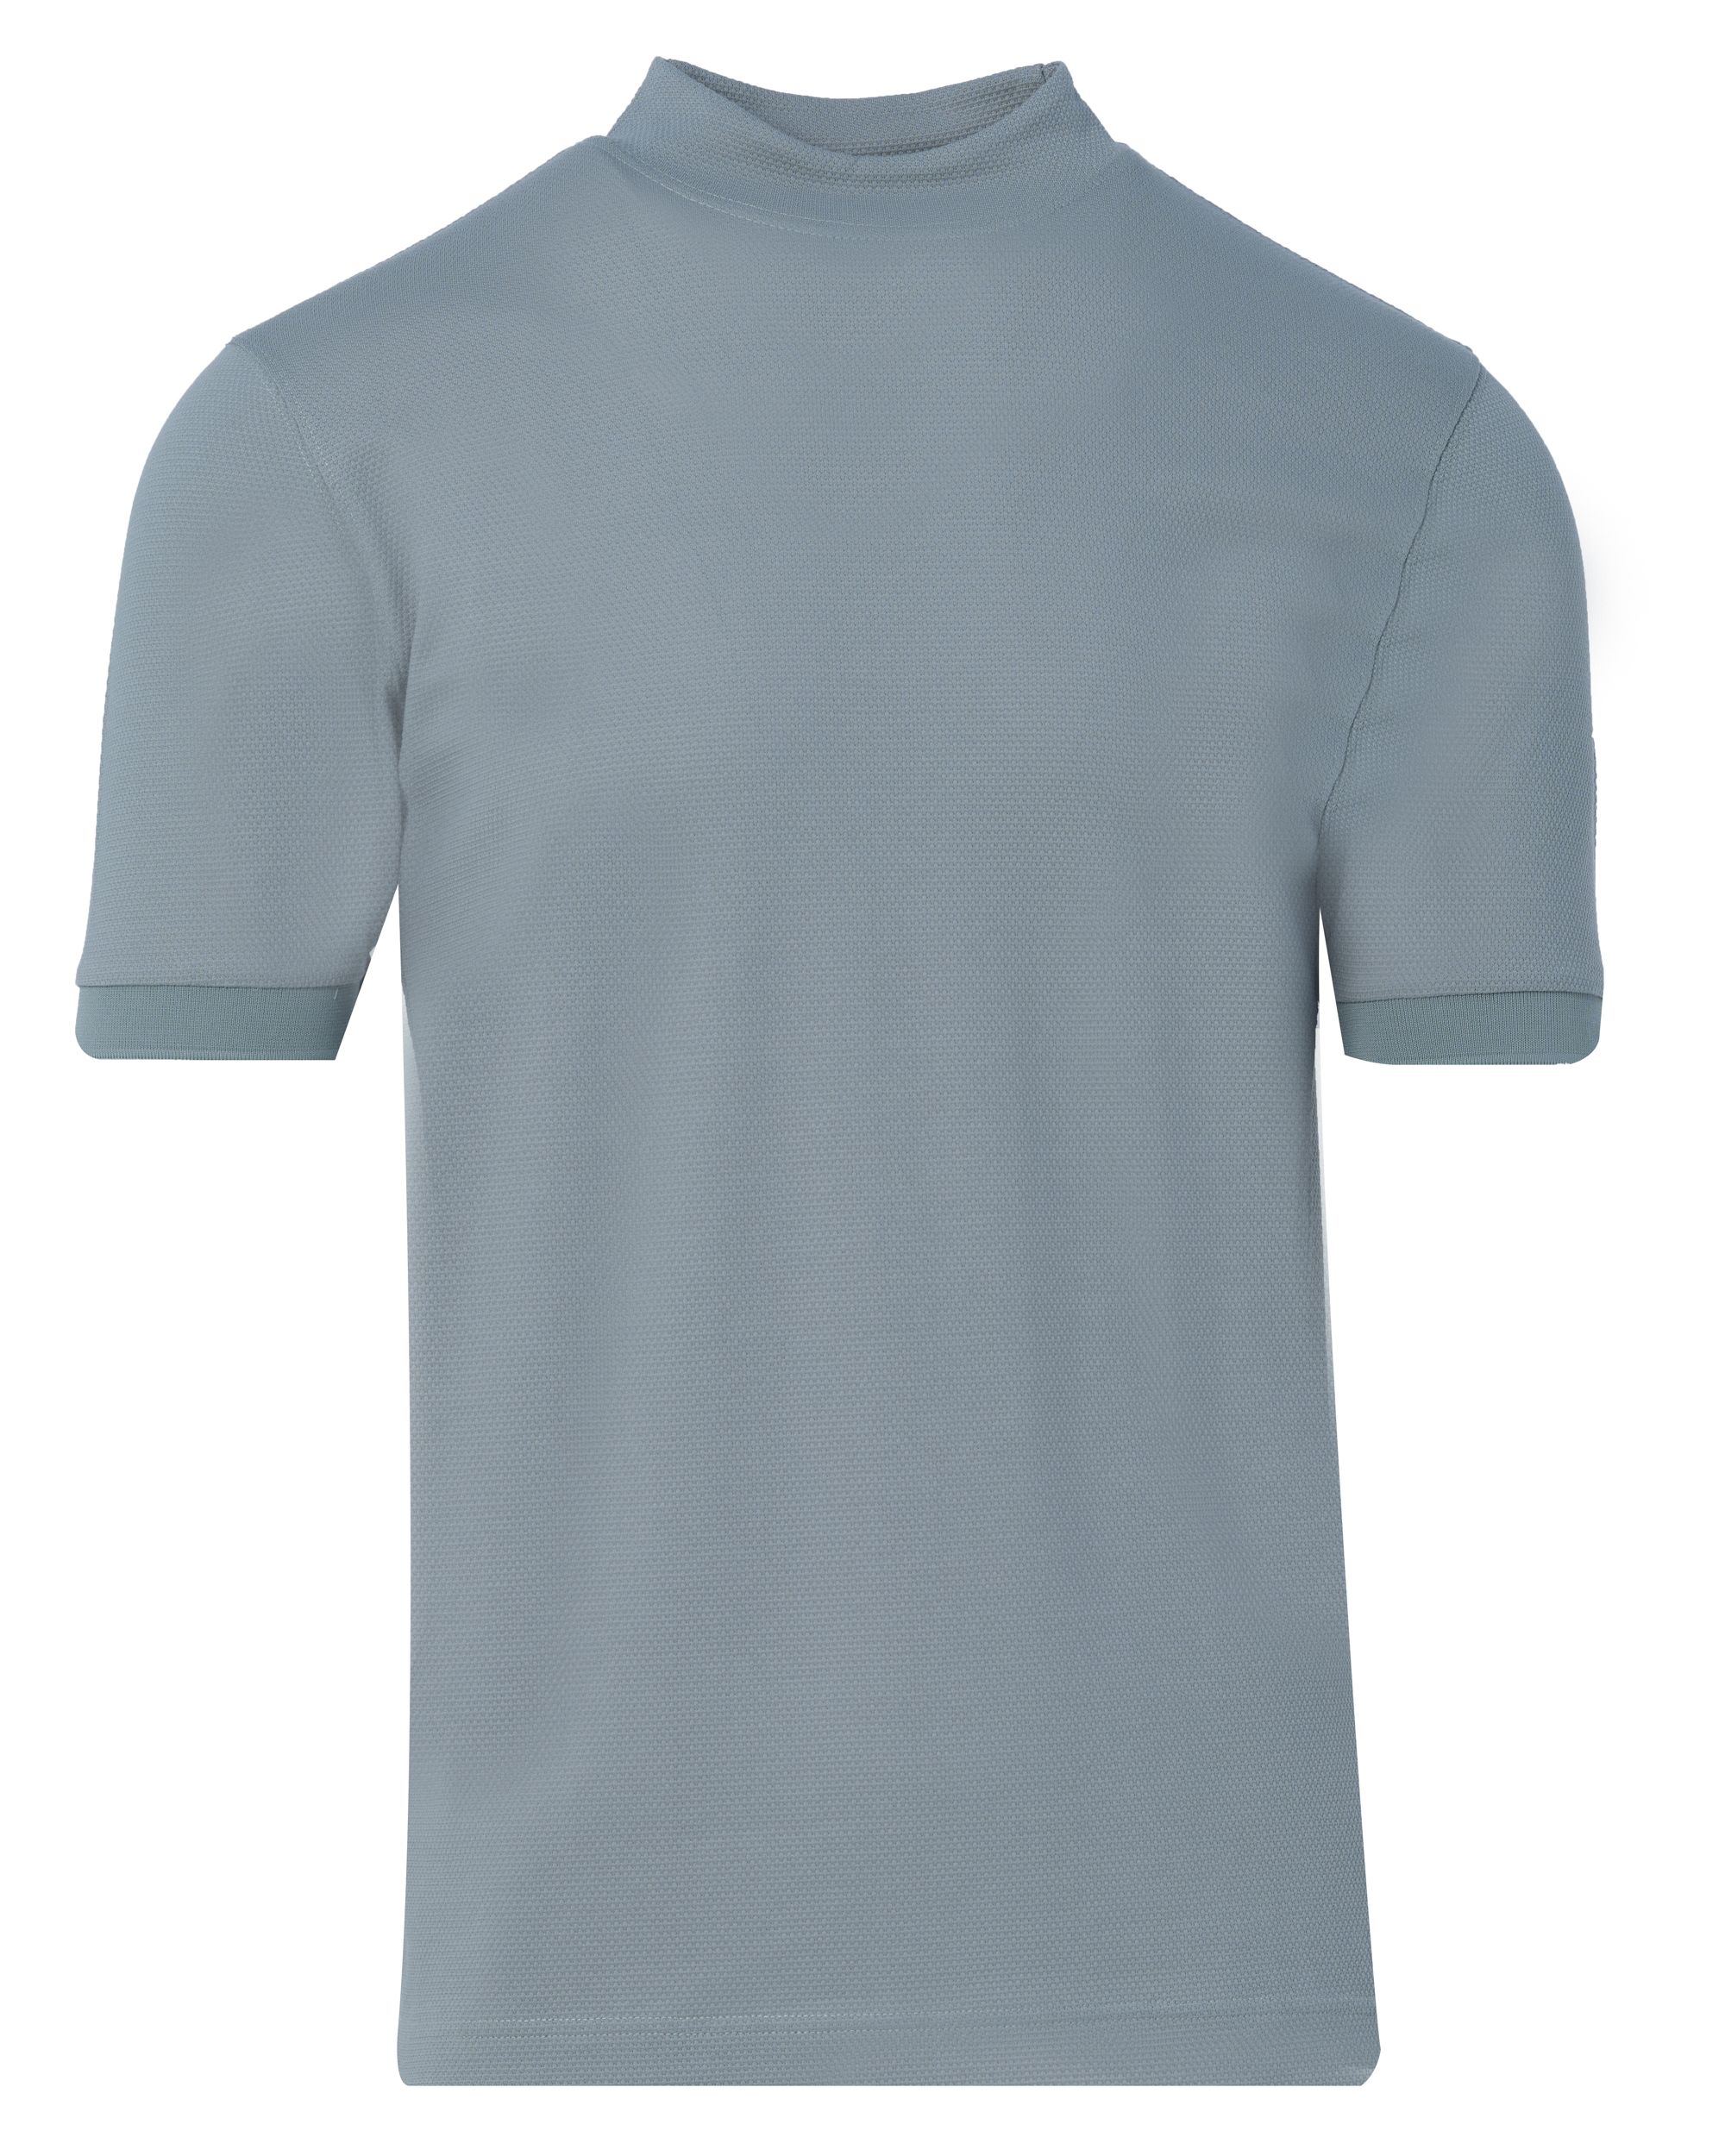 Drykorn Dustin T-shirt KM Groen 086538-001-L